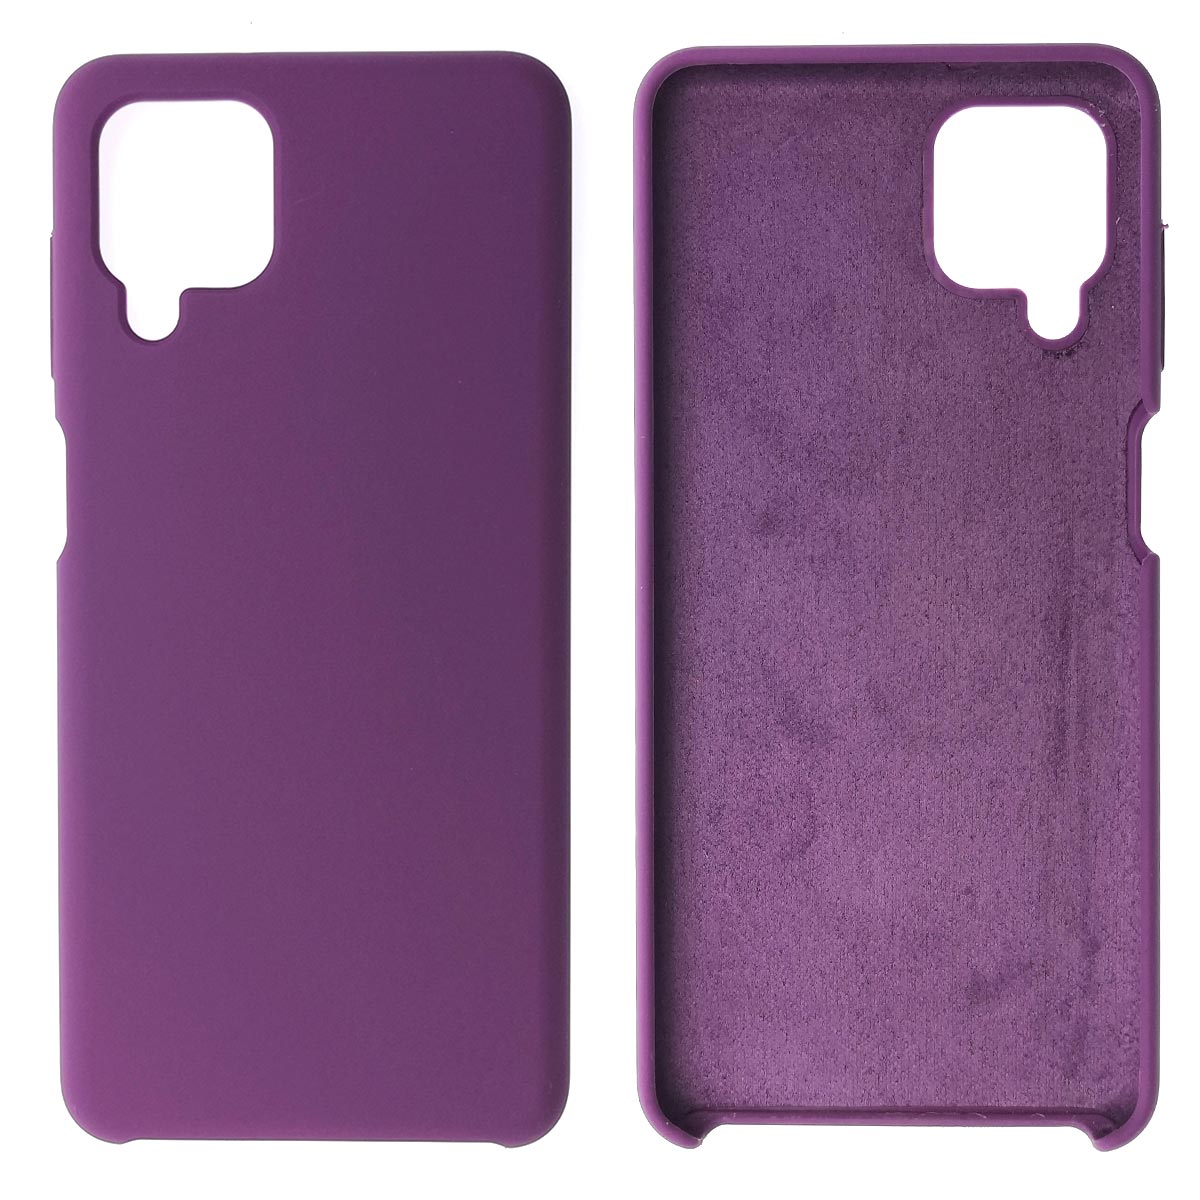 Чехол накладка Silicon Cover для SAMSUNG Galaxy A12 (SM-A125), силикон, бархат, цвет фиолетовый